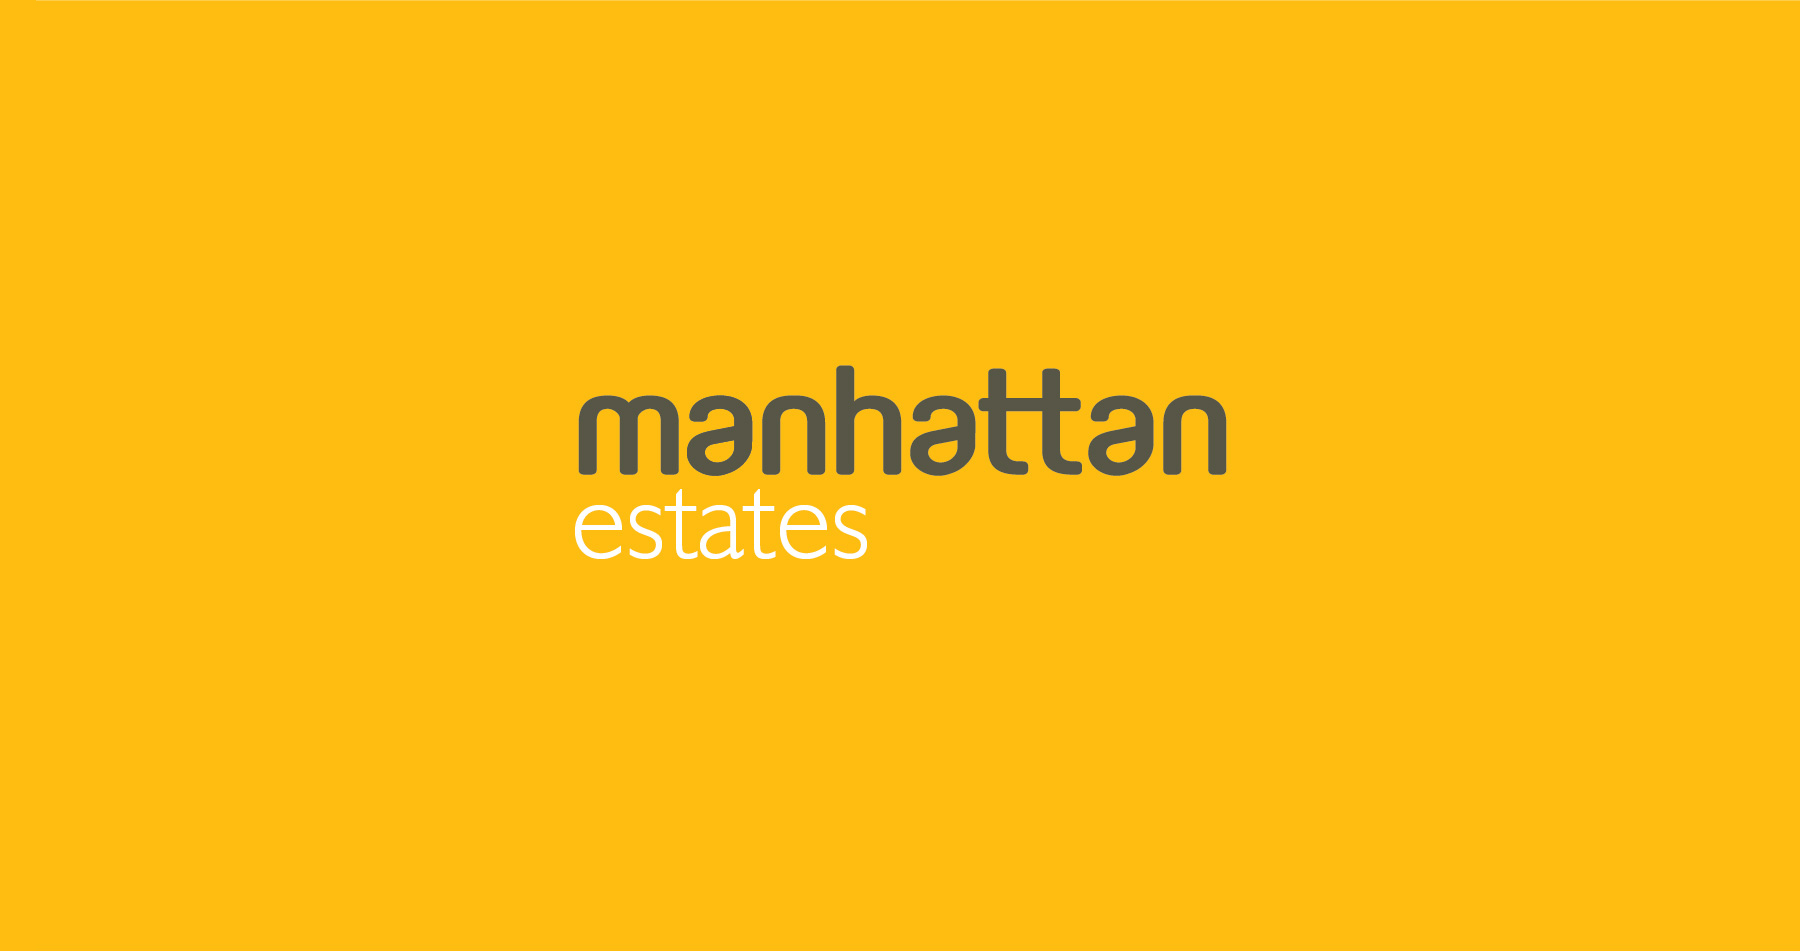 Manhattan estates Bolton